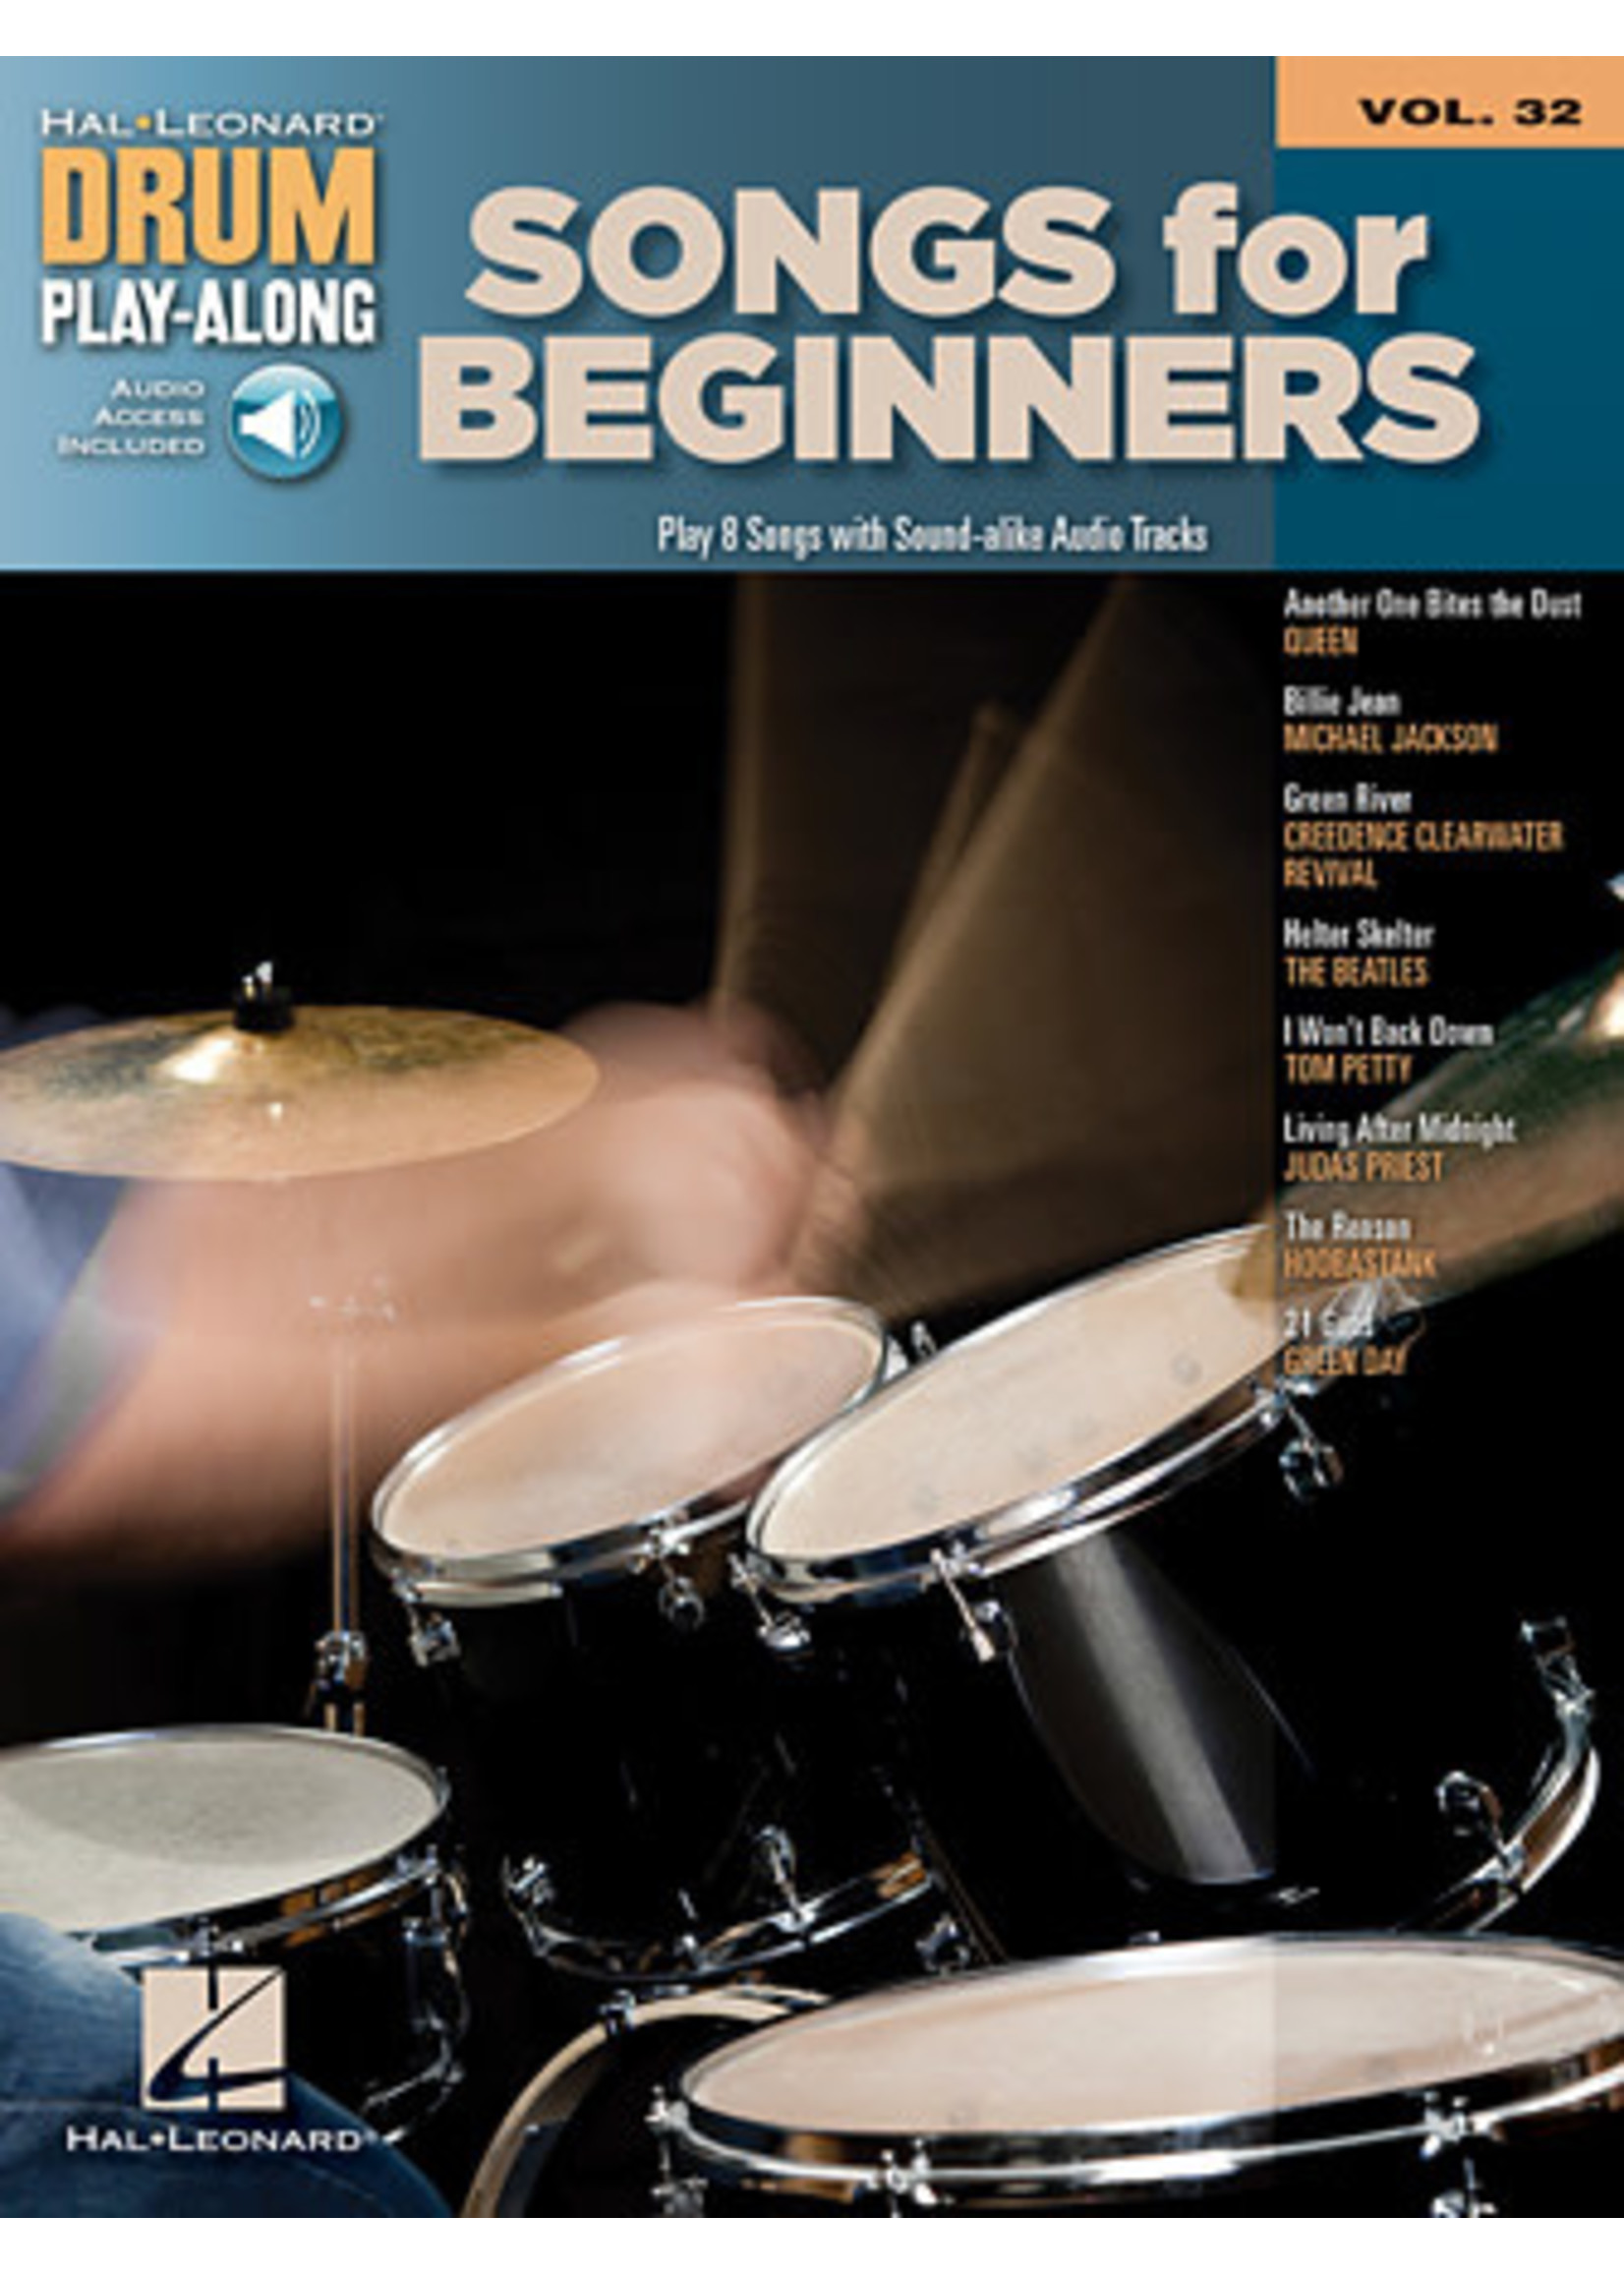 Hal Leonard Songs for Beginners Drum Play-Along Vol 32